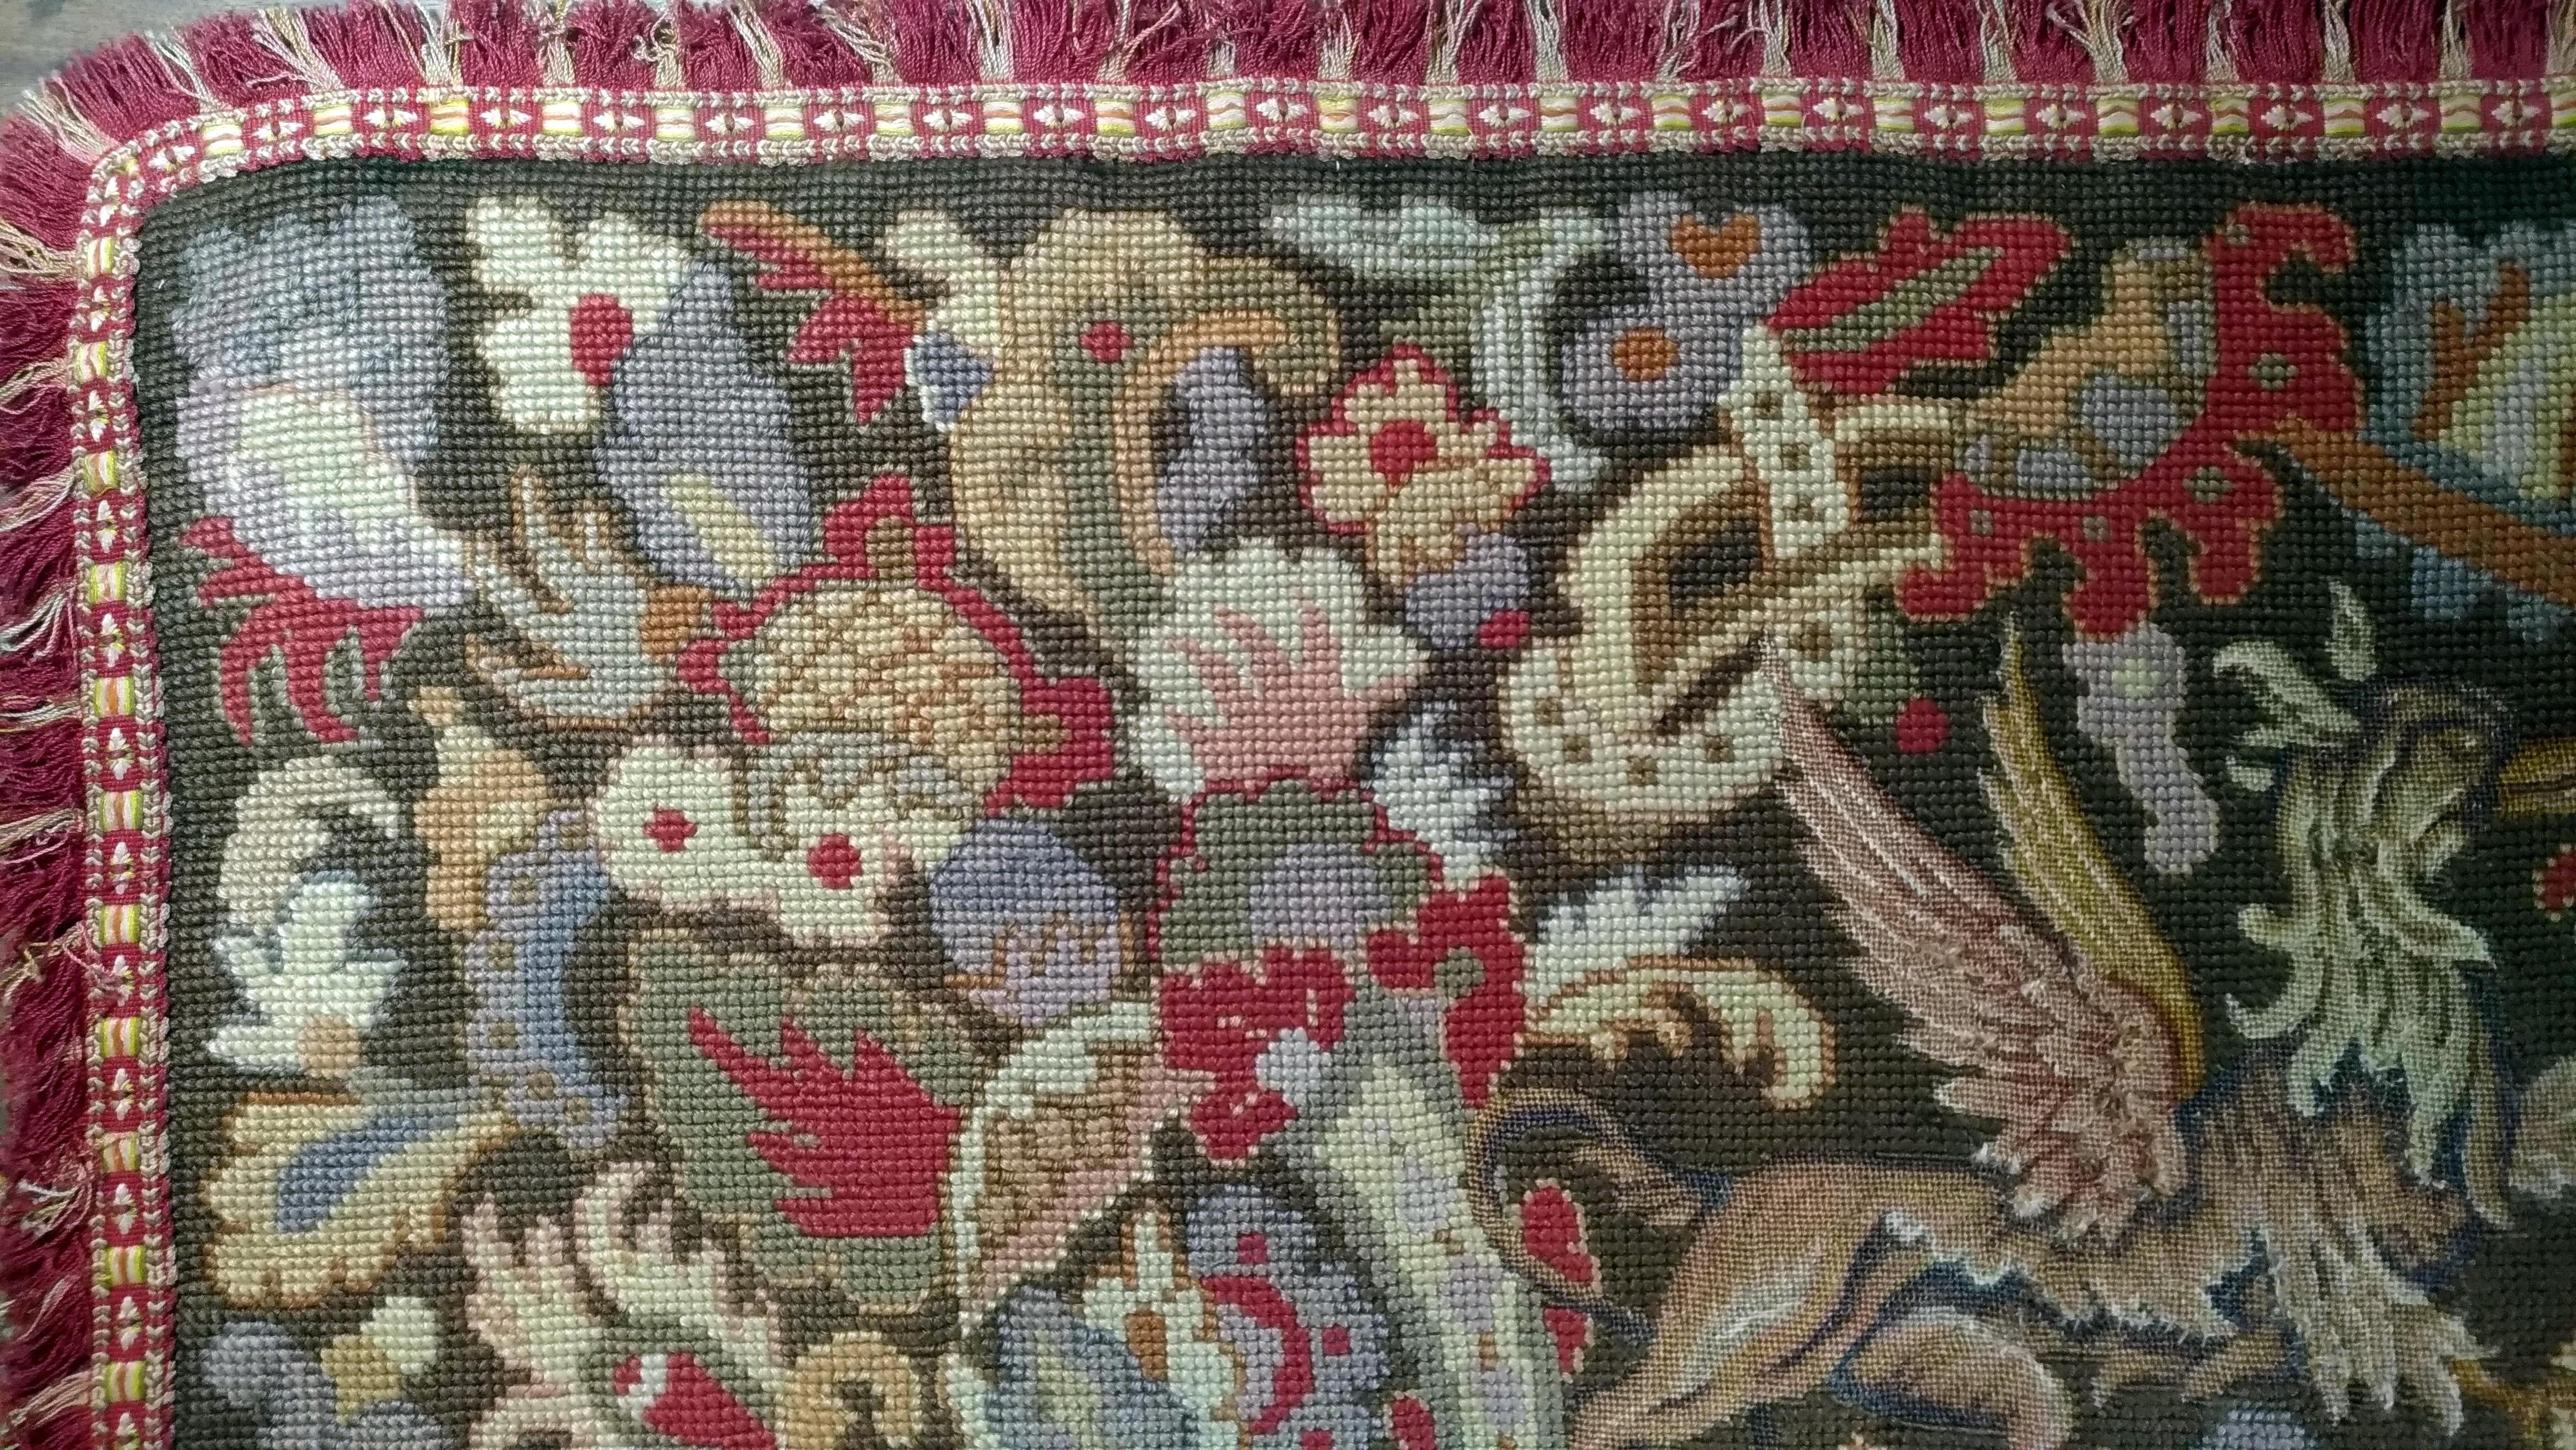 951 - 19th century tapestry needlepoint.